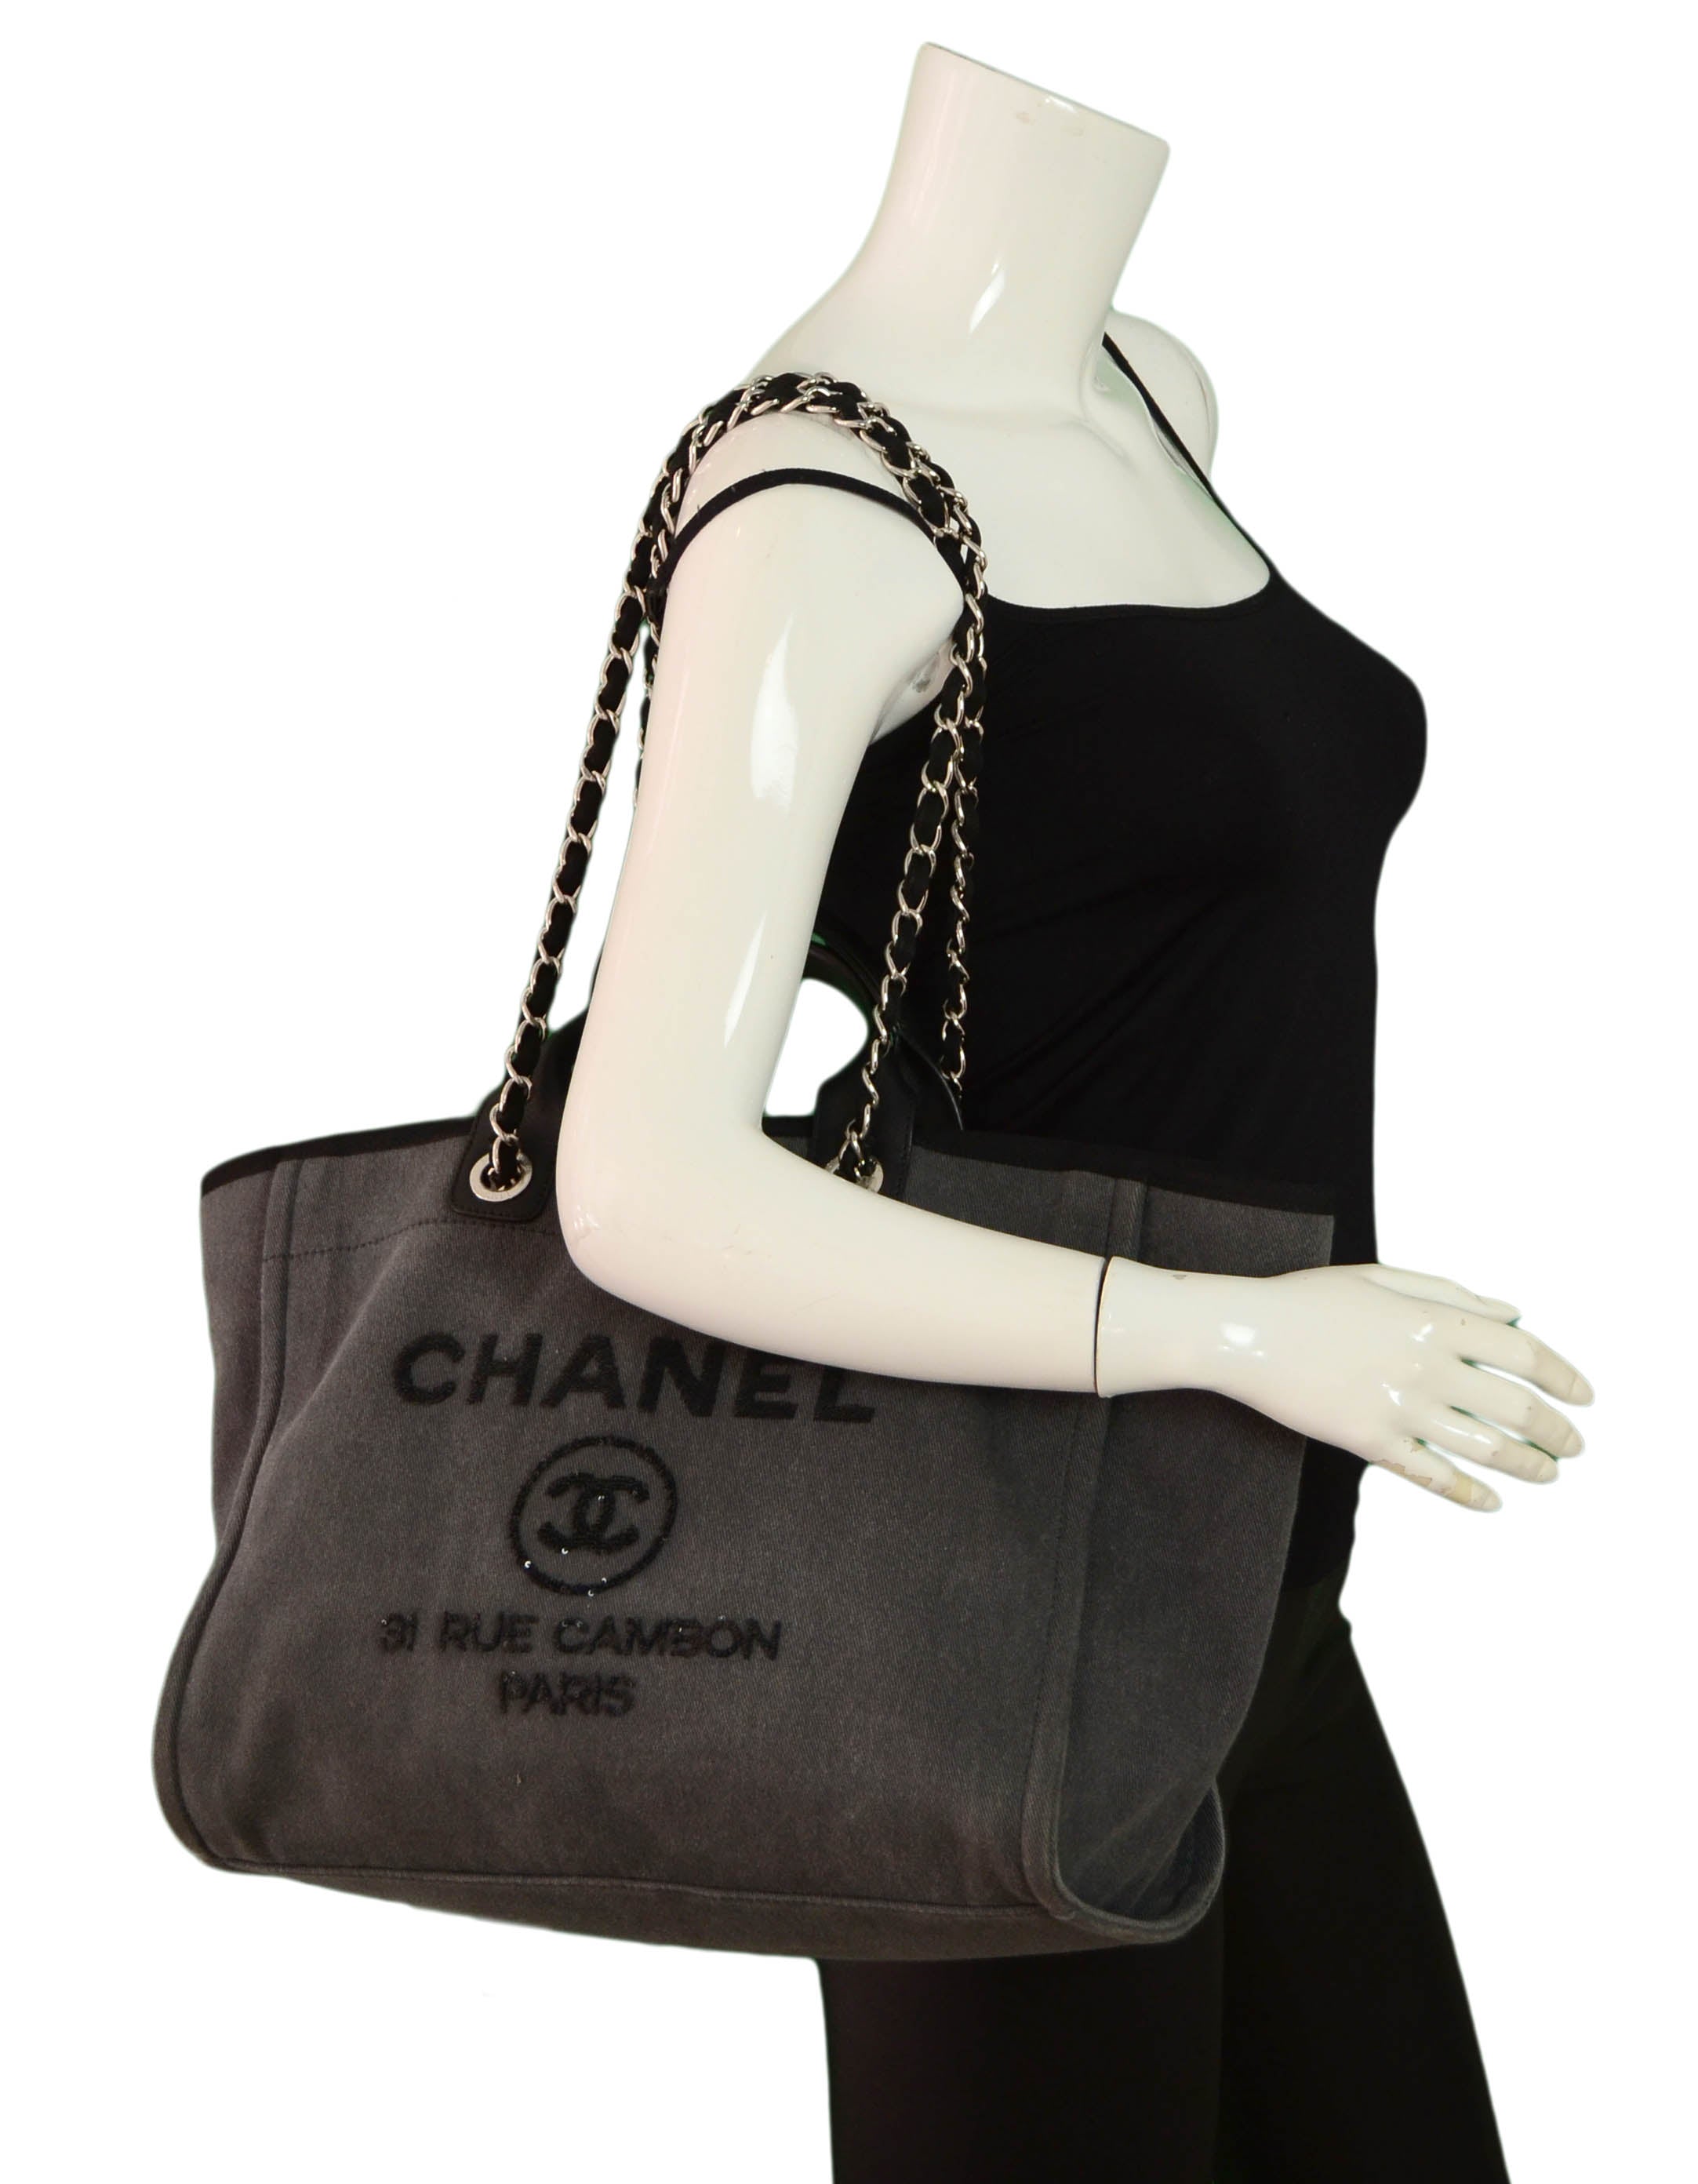 Chanel Black Denim Large Sequins Deauville Tote Bag